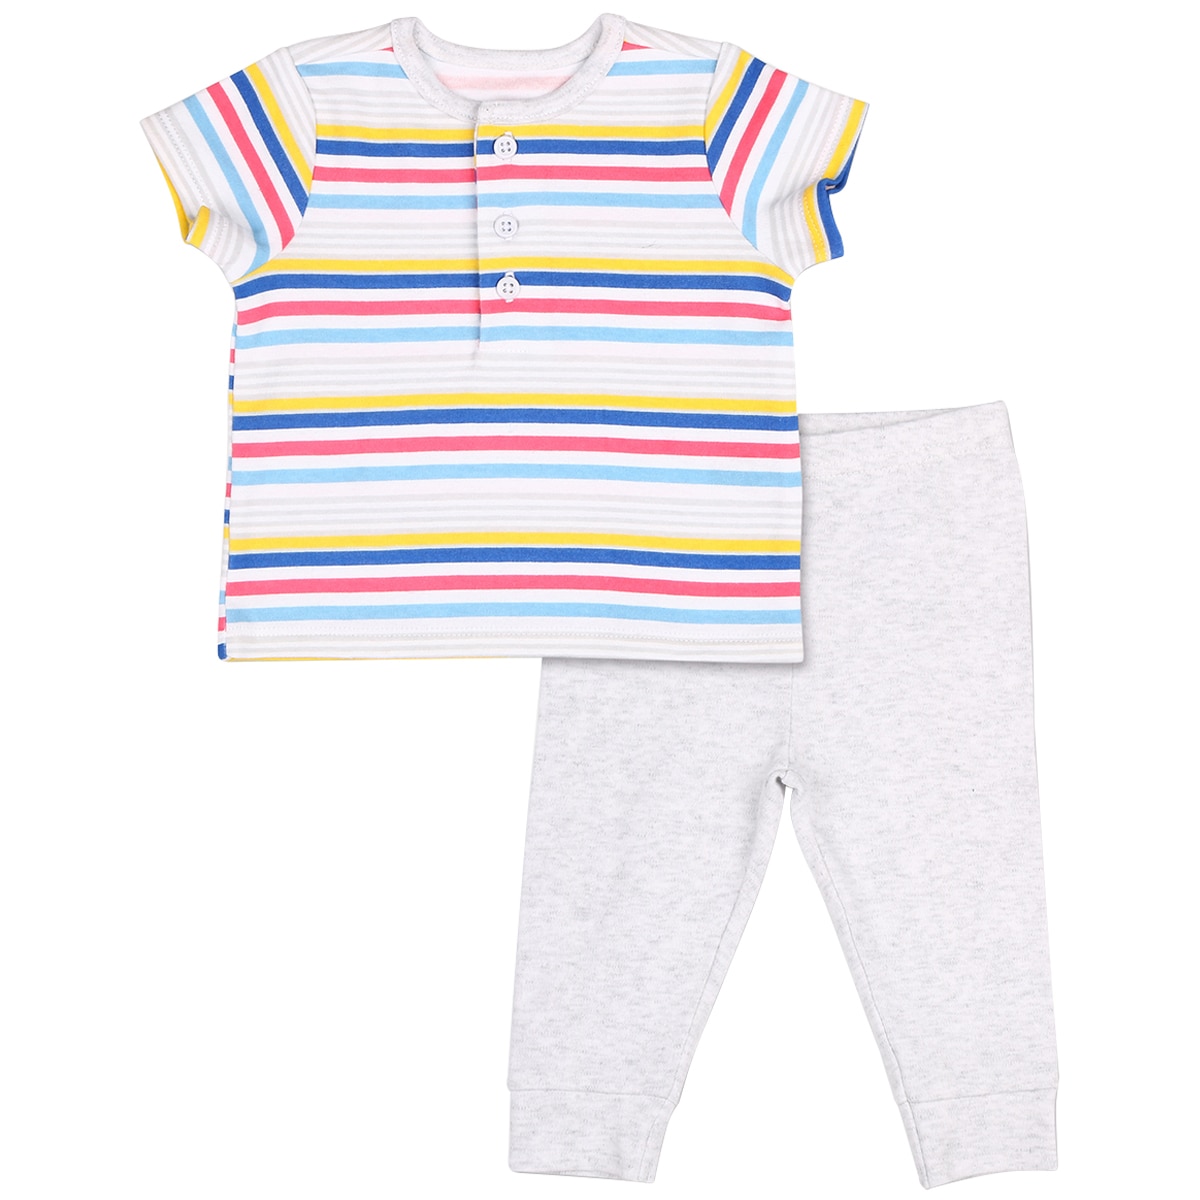 Peanut Shell 2pc Baby Set - Striped Top/Print Pants